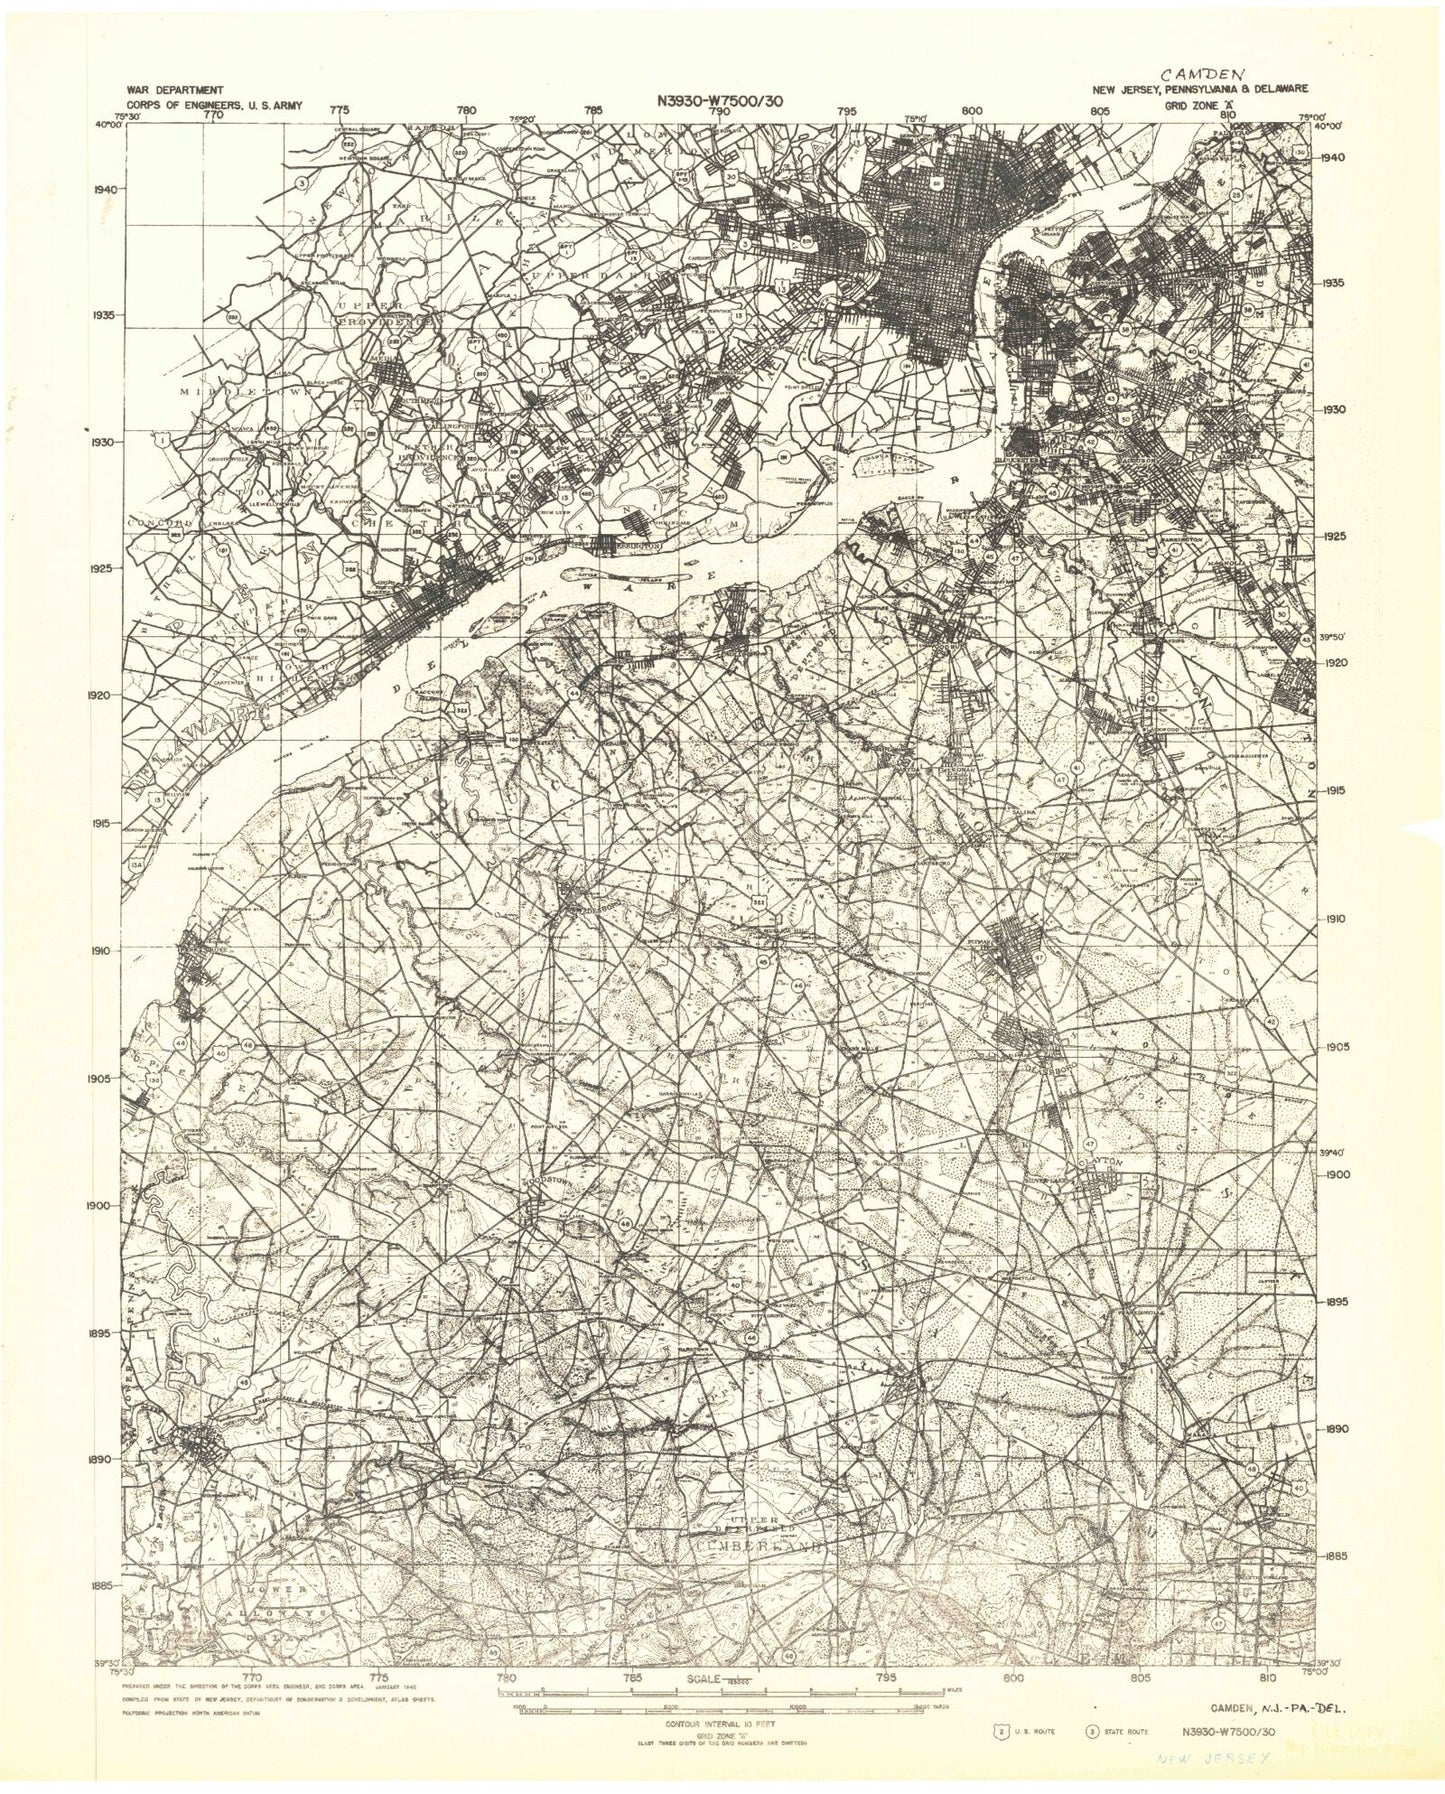 Historic 1942 Camden New Jersey 30'x30' Topo Map Image